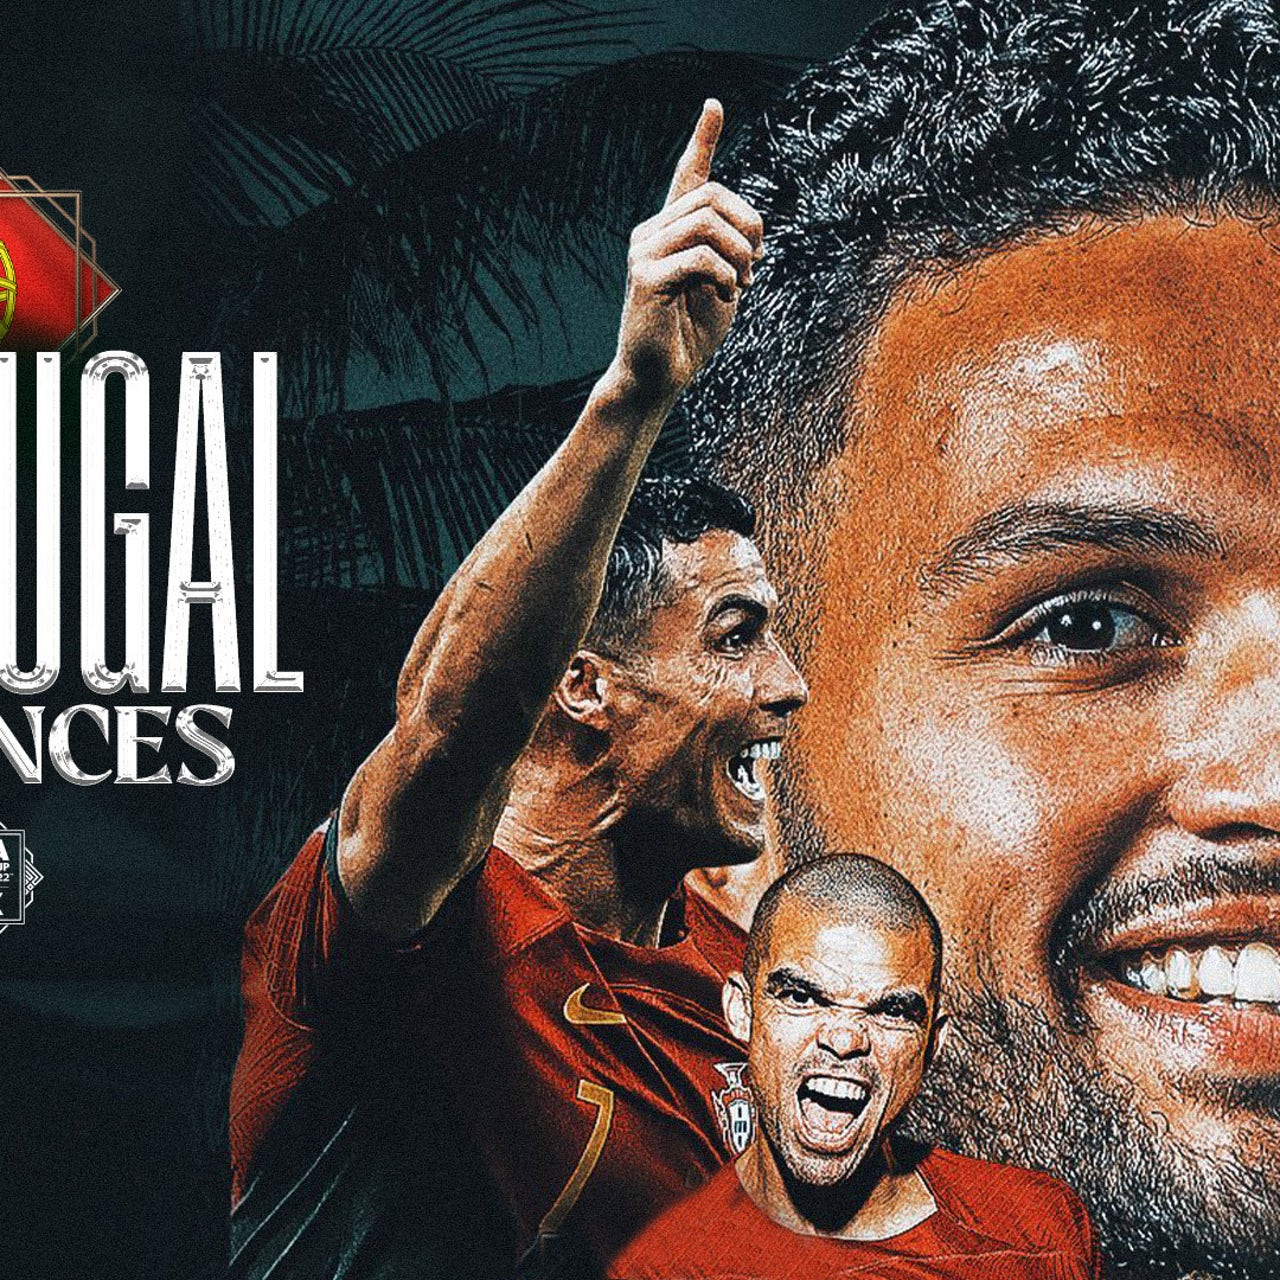 Liga Portugal - Liga Portugal updated their cover photo.